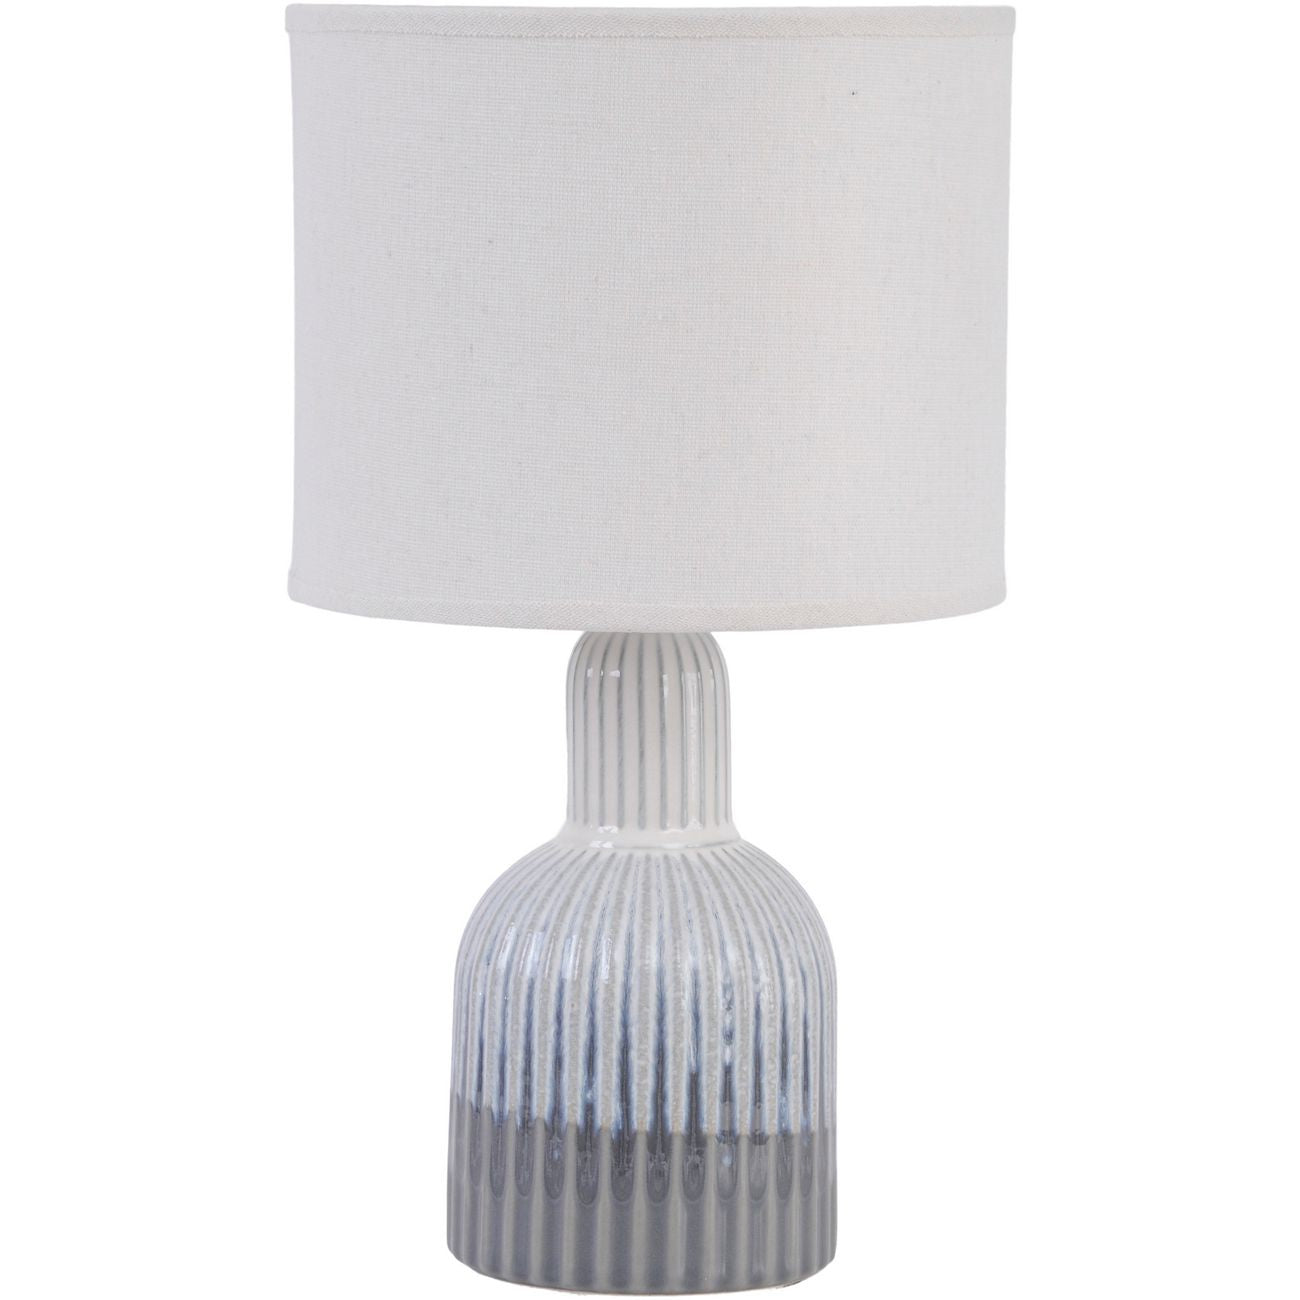 Libra Porcelain Lamp Ribbed Detailing Shade Large Grey White